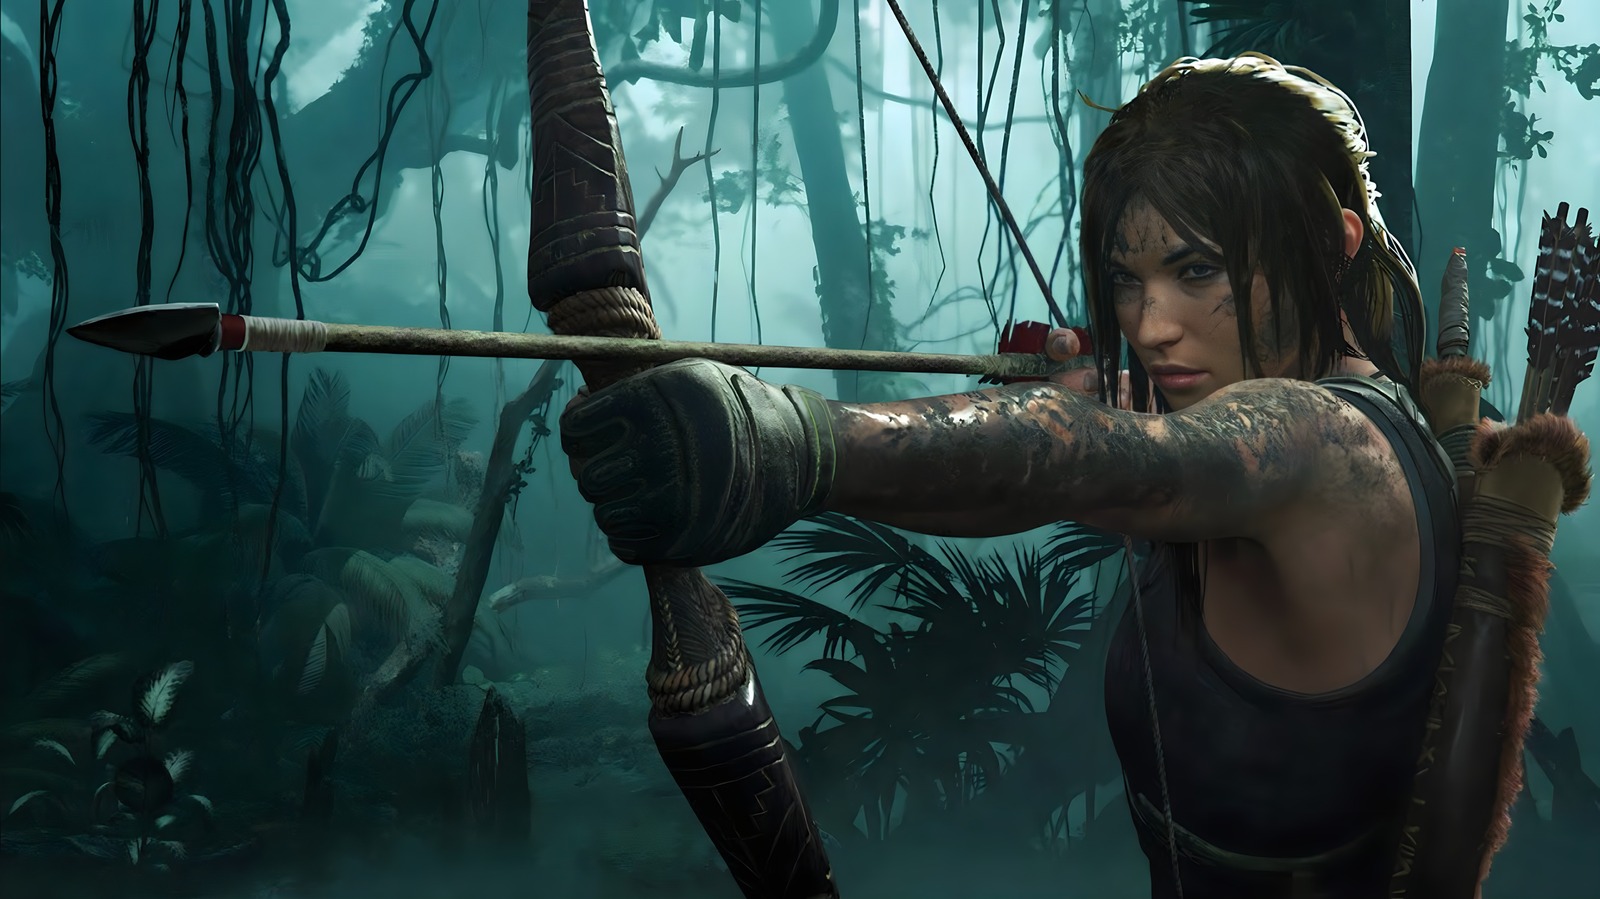 Phoebe Waller-Bridge and the Tomb Raider Writers Debate Lara Croft’s Body for the Right Reasons